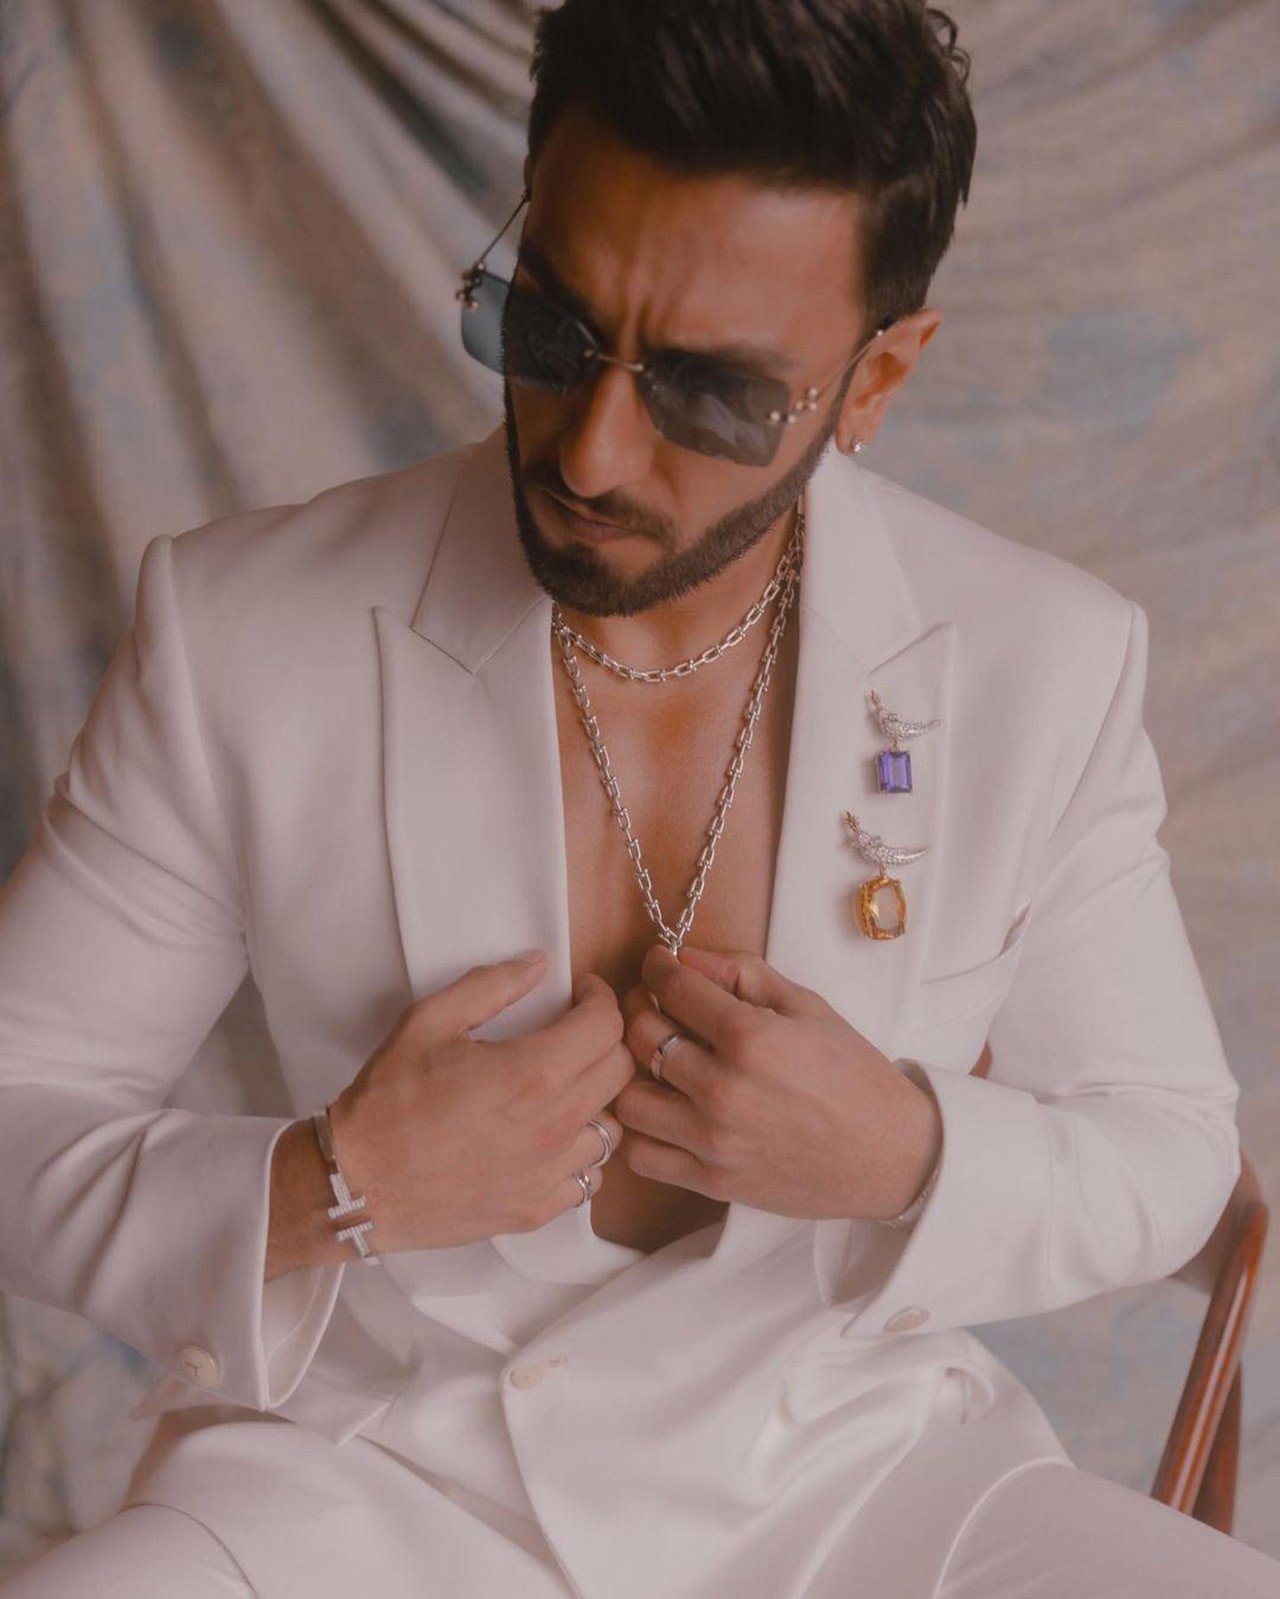 Ranveer Singh Looks Dapper In Blue Suit, Shares Pics On Insta!